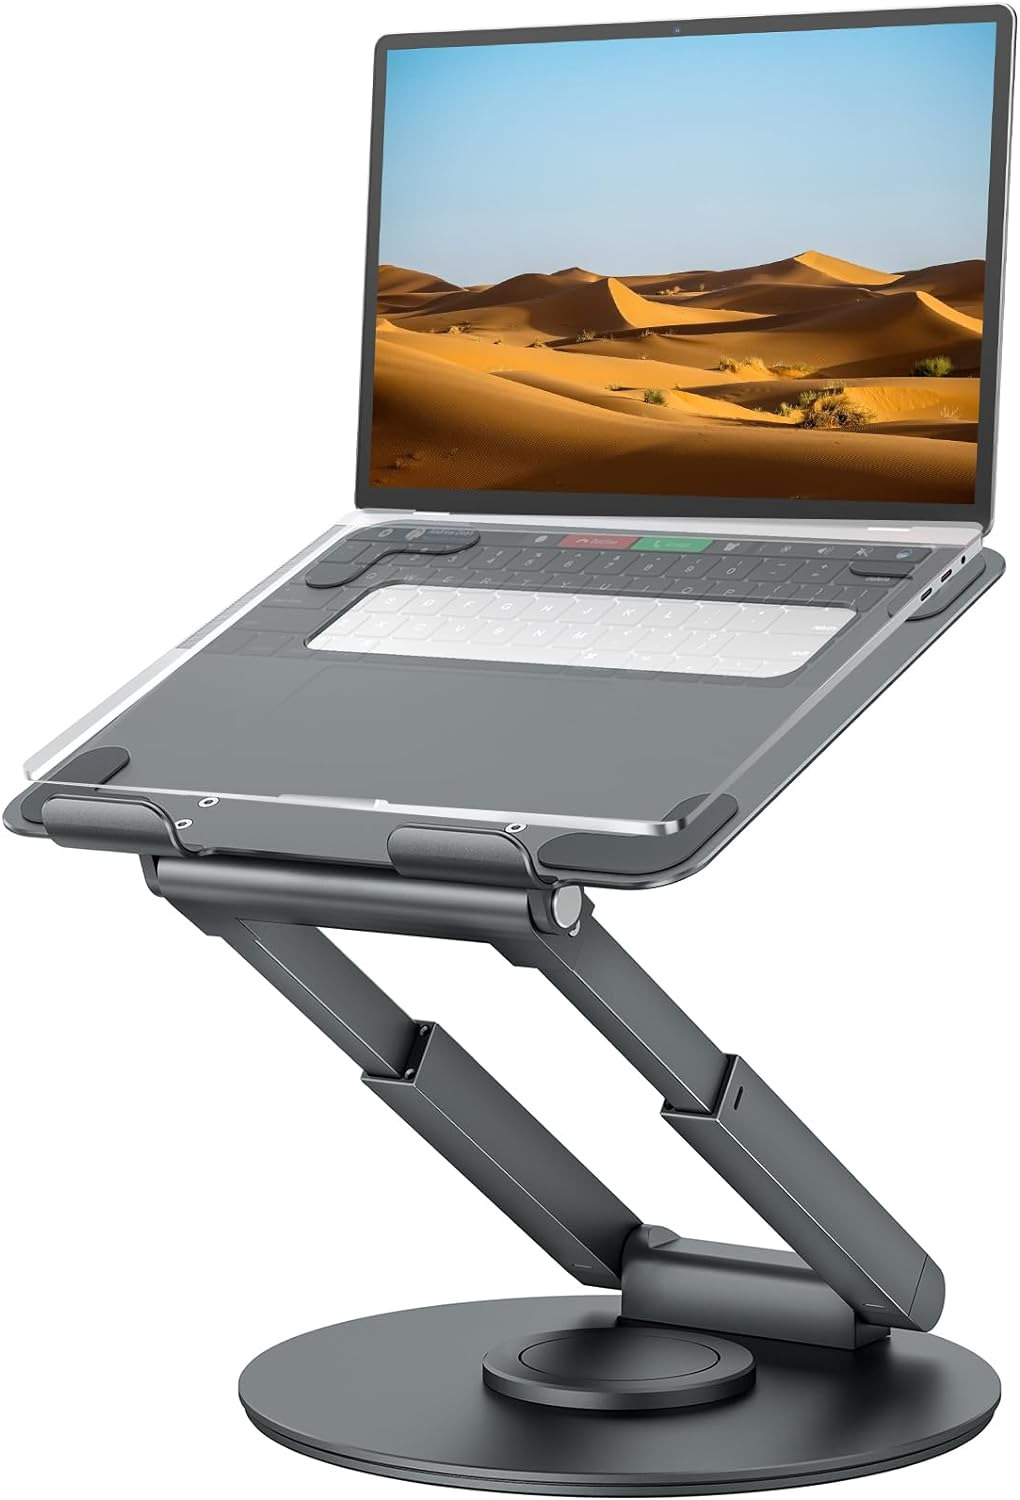 Telescopic Laptop Stand, w/ 360° Swivel Base, Height Adjustable, Portable, Riser